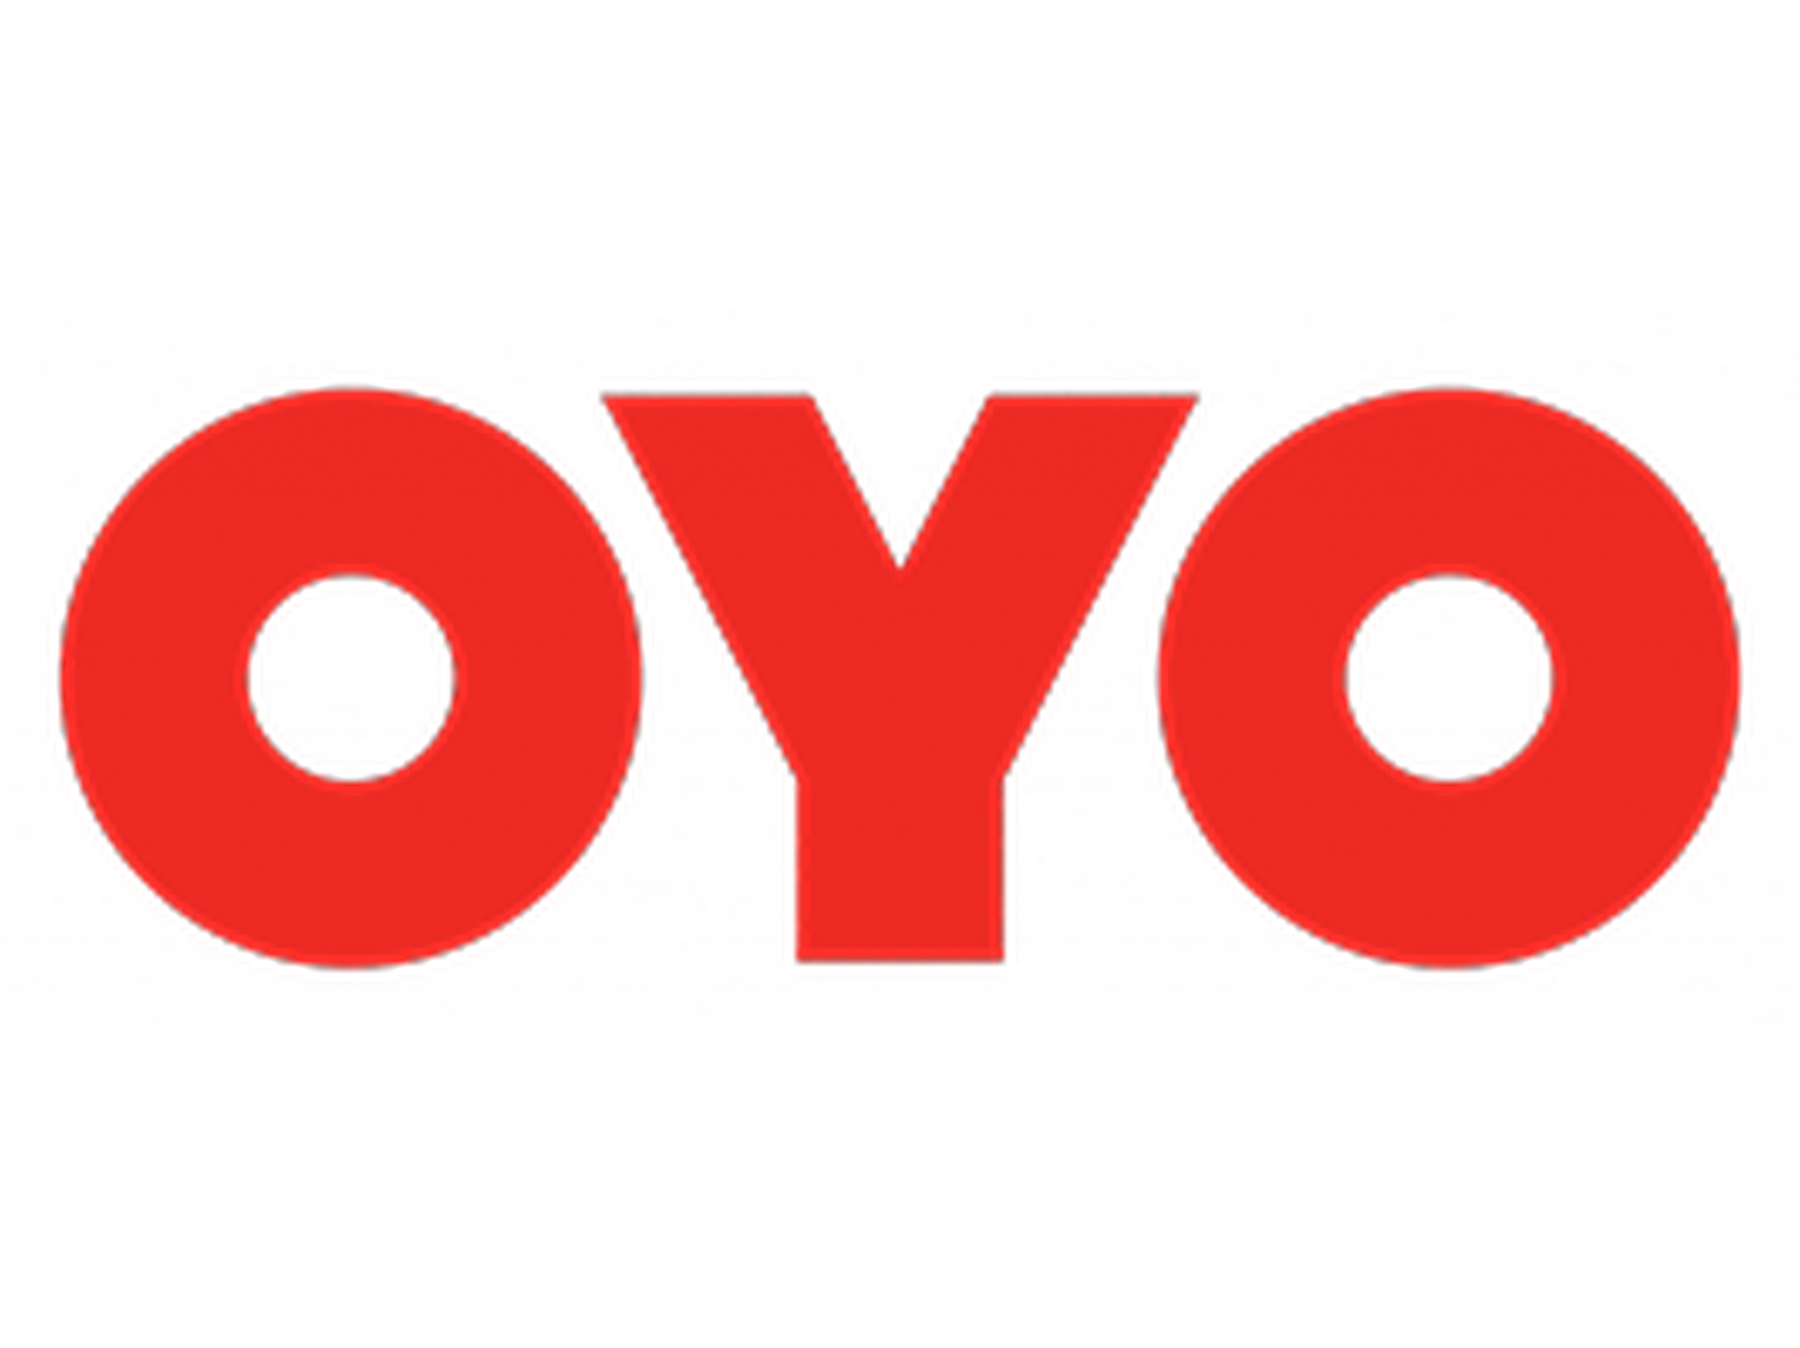 OYO Promo Code